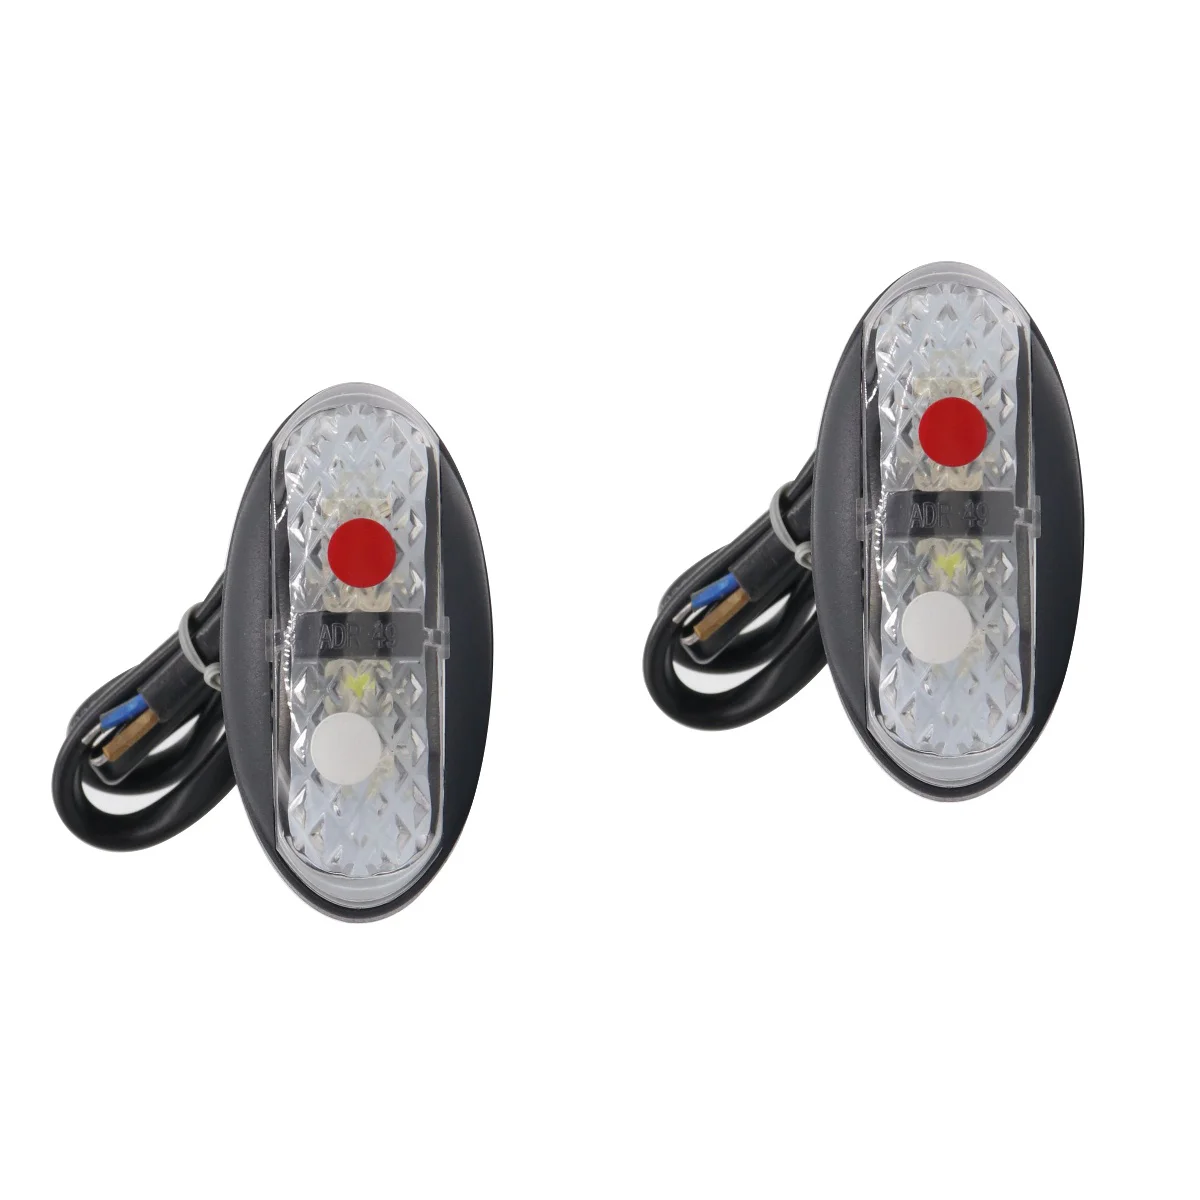 

2pcs 10-30V LED light Caravan Trailer Truck Cargo Position Light Side Marker Lights Indicator Lamps (White and Red Light Color)